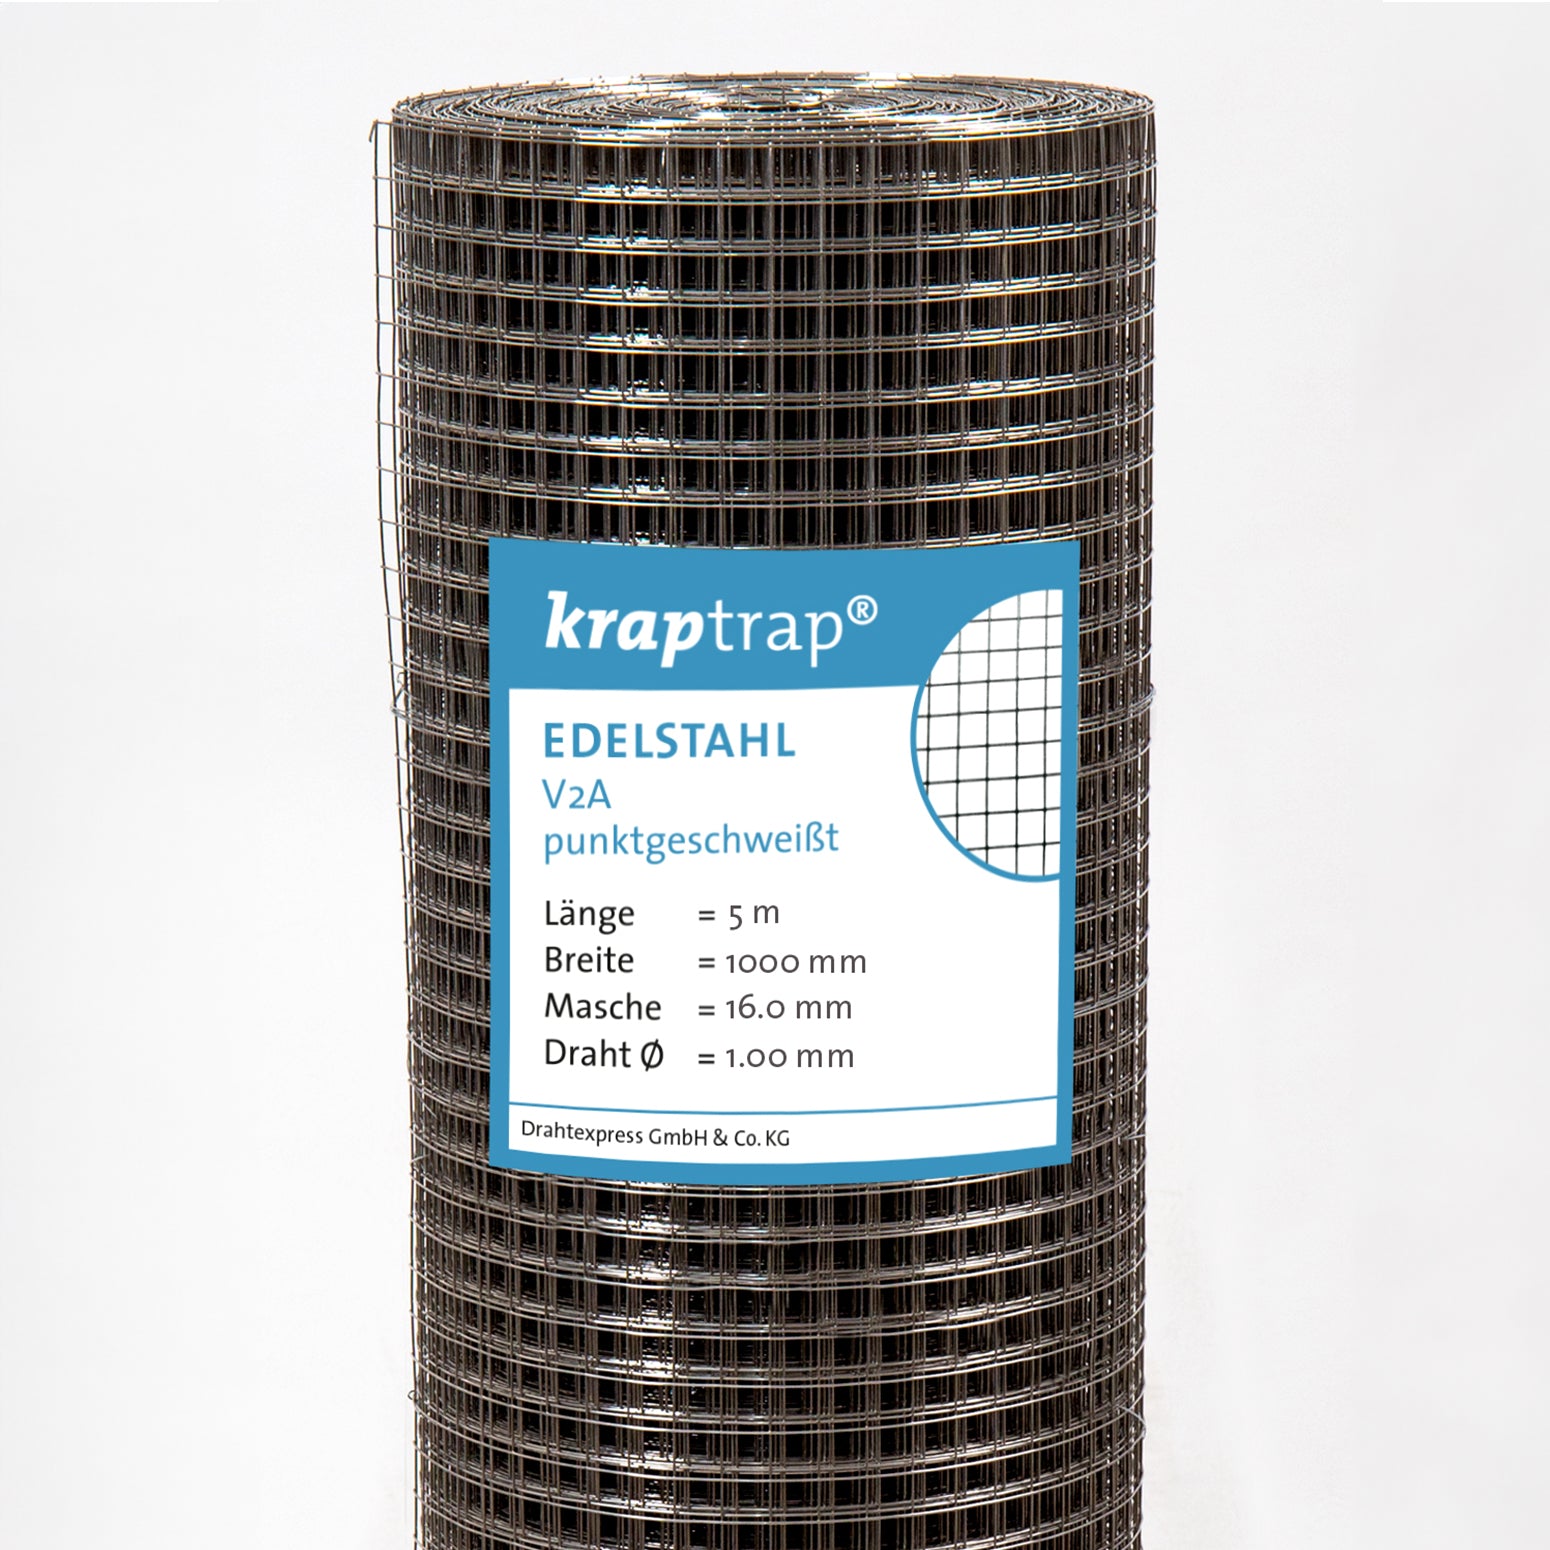 Kraptrap® Edelstahl Drahtgitter V2A 16 x 16 mm mit 1,0 mm Stärke